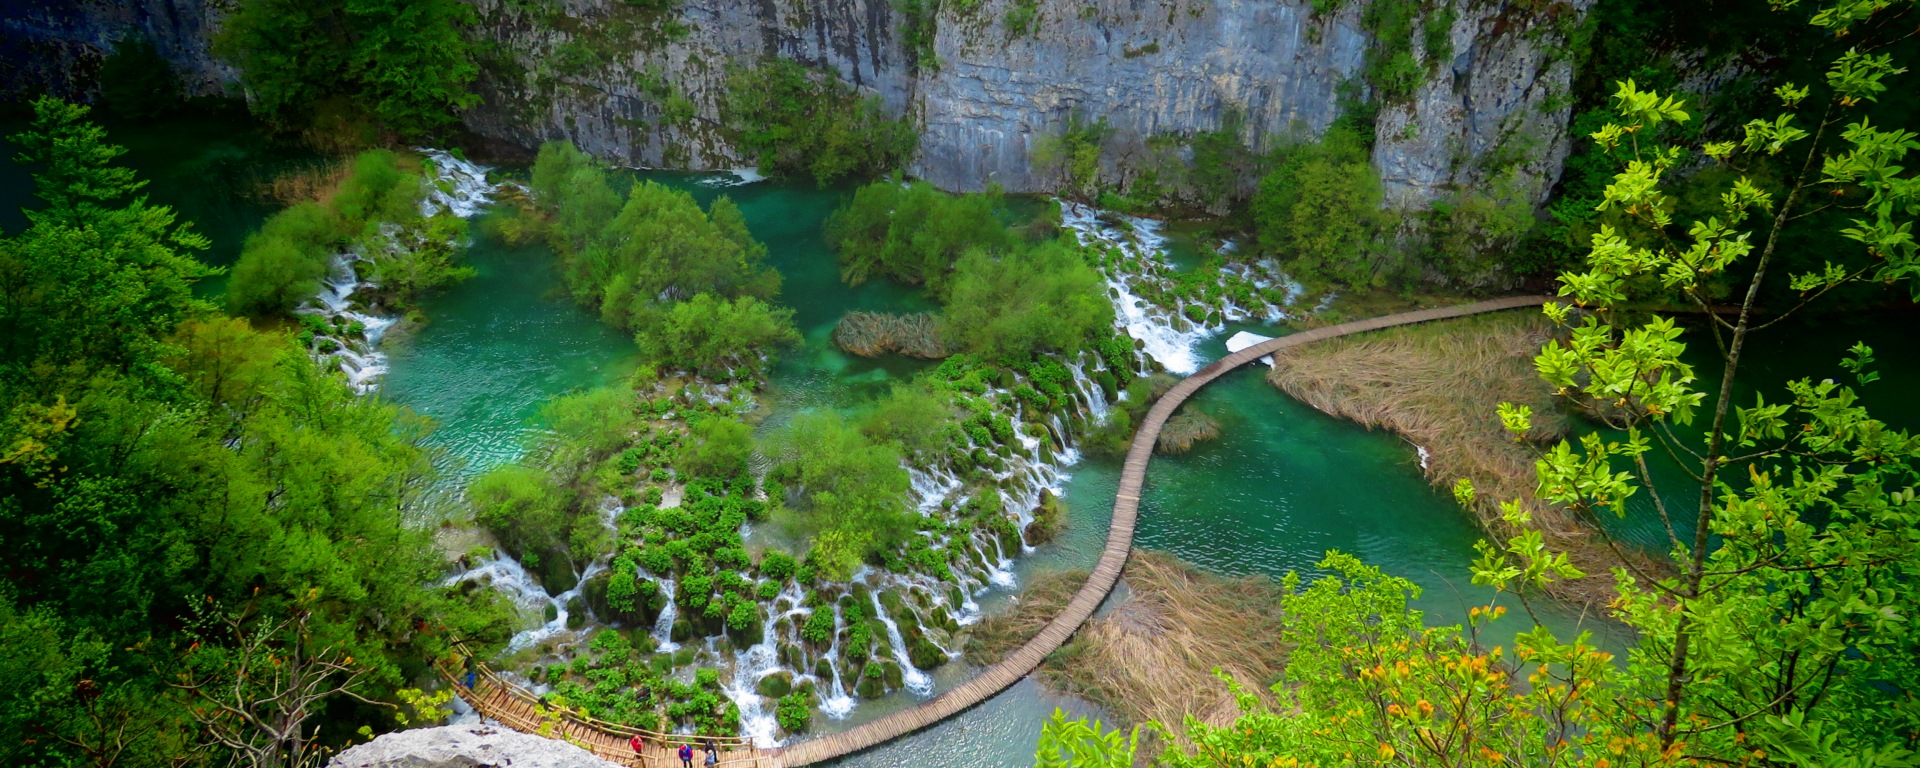 Plitvice Falls from above - Croatia - by Anika Mikkelson - Miss Maps - www.MissMaps.com